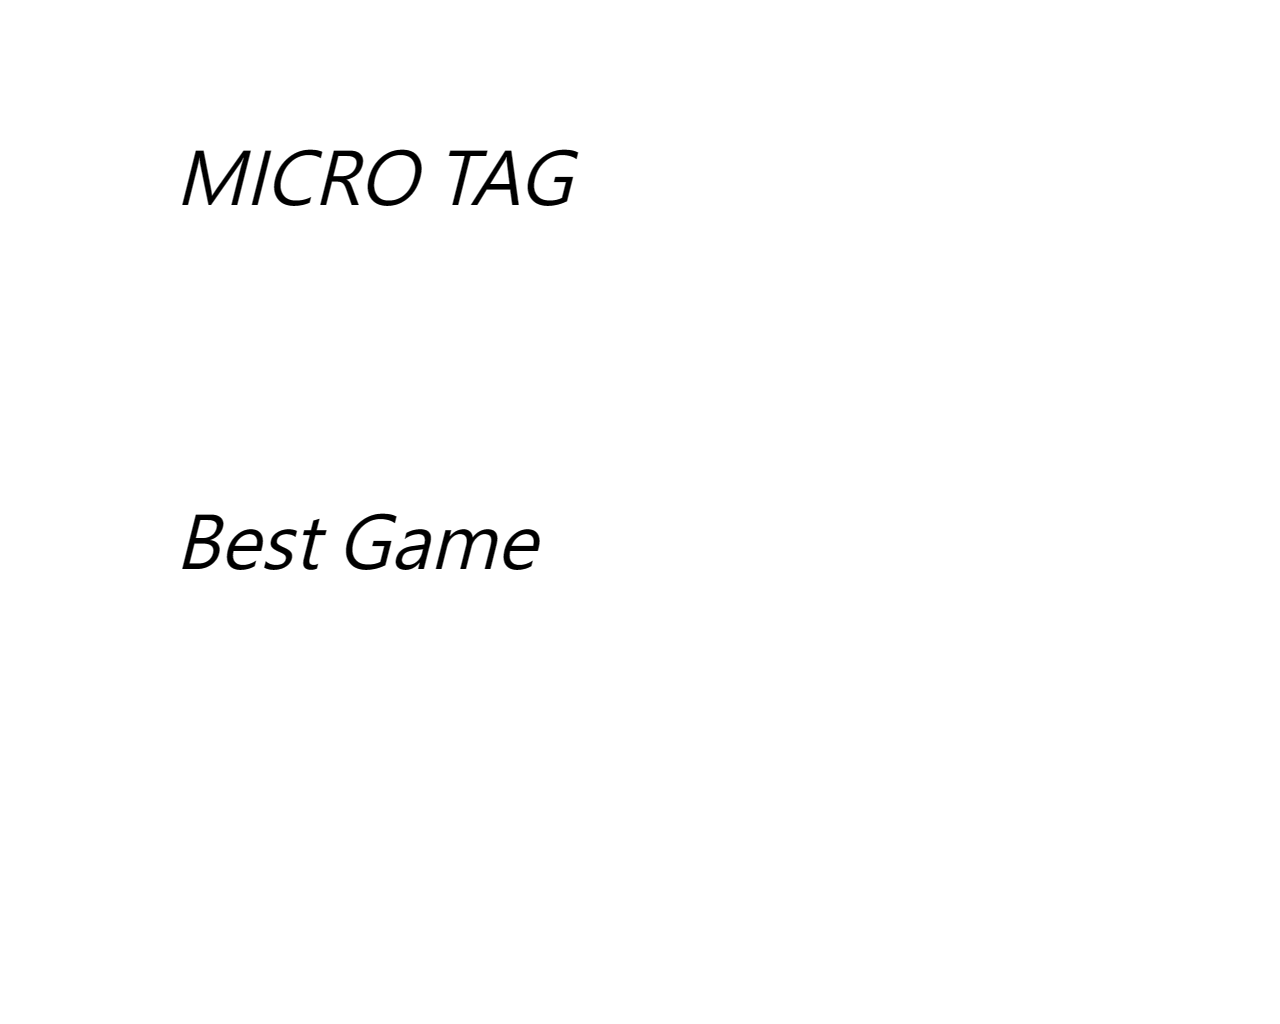 Micro Tag